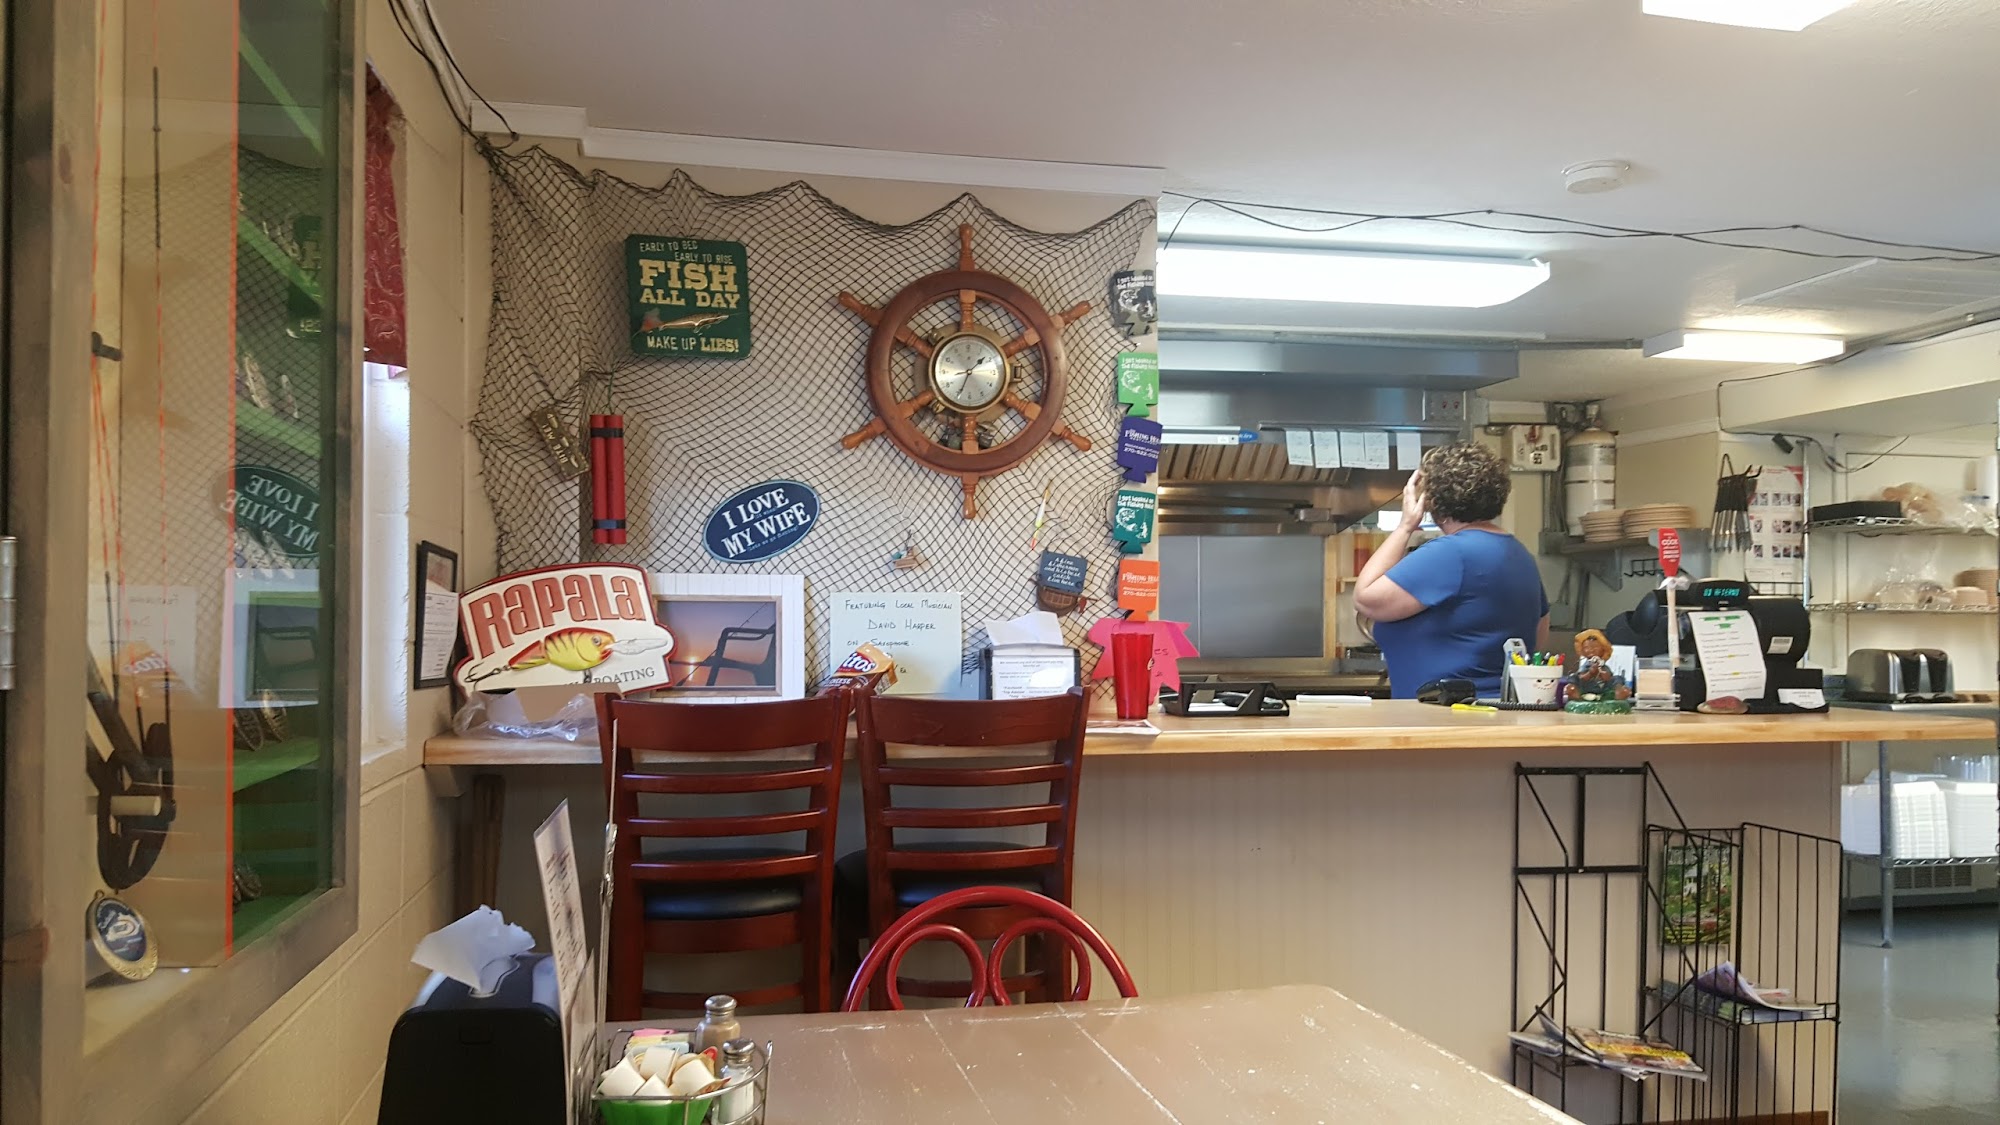 The Fishin Hole Restaurant